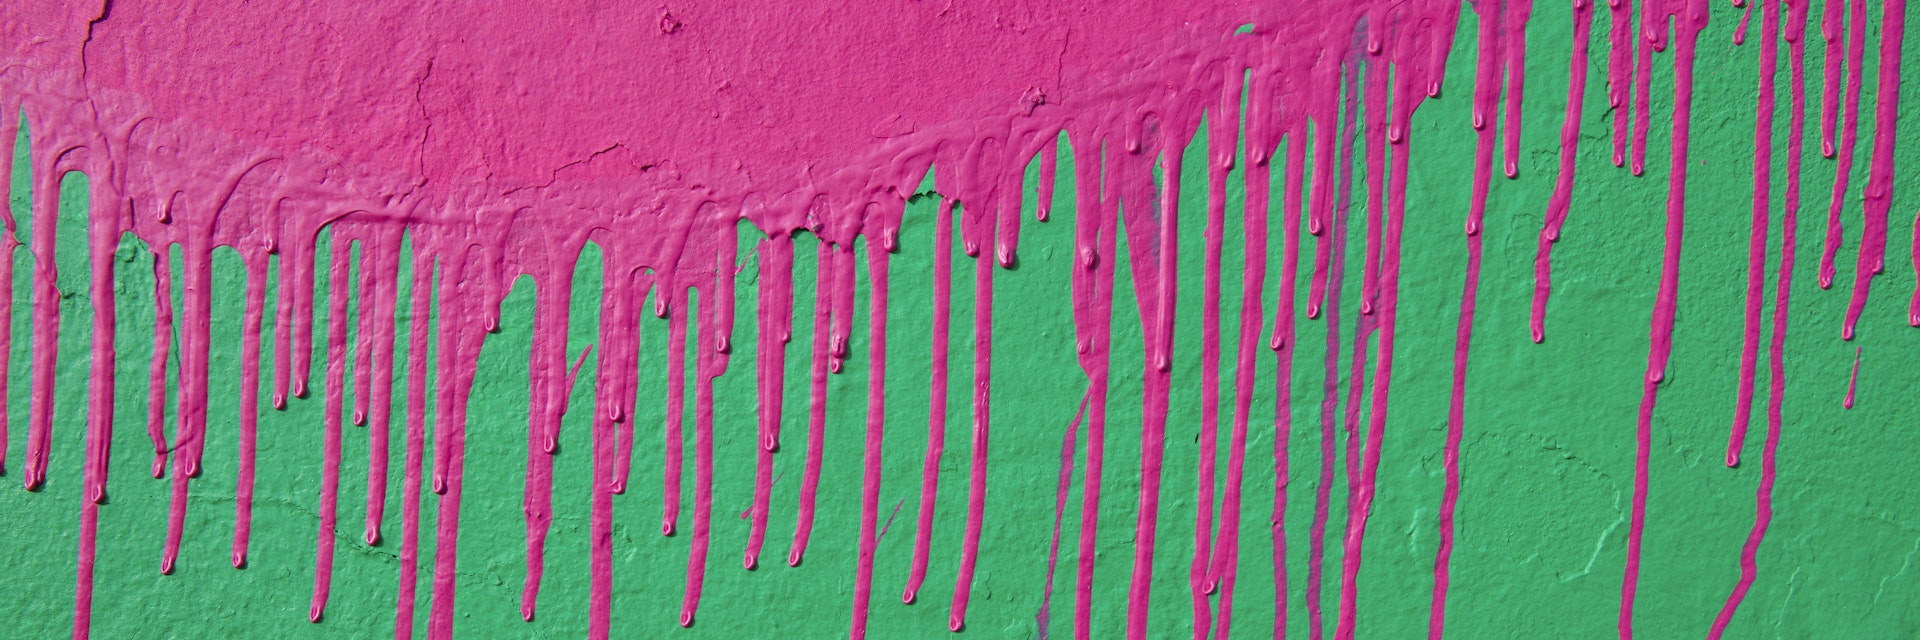 Graffiti Spray Paint Dripping